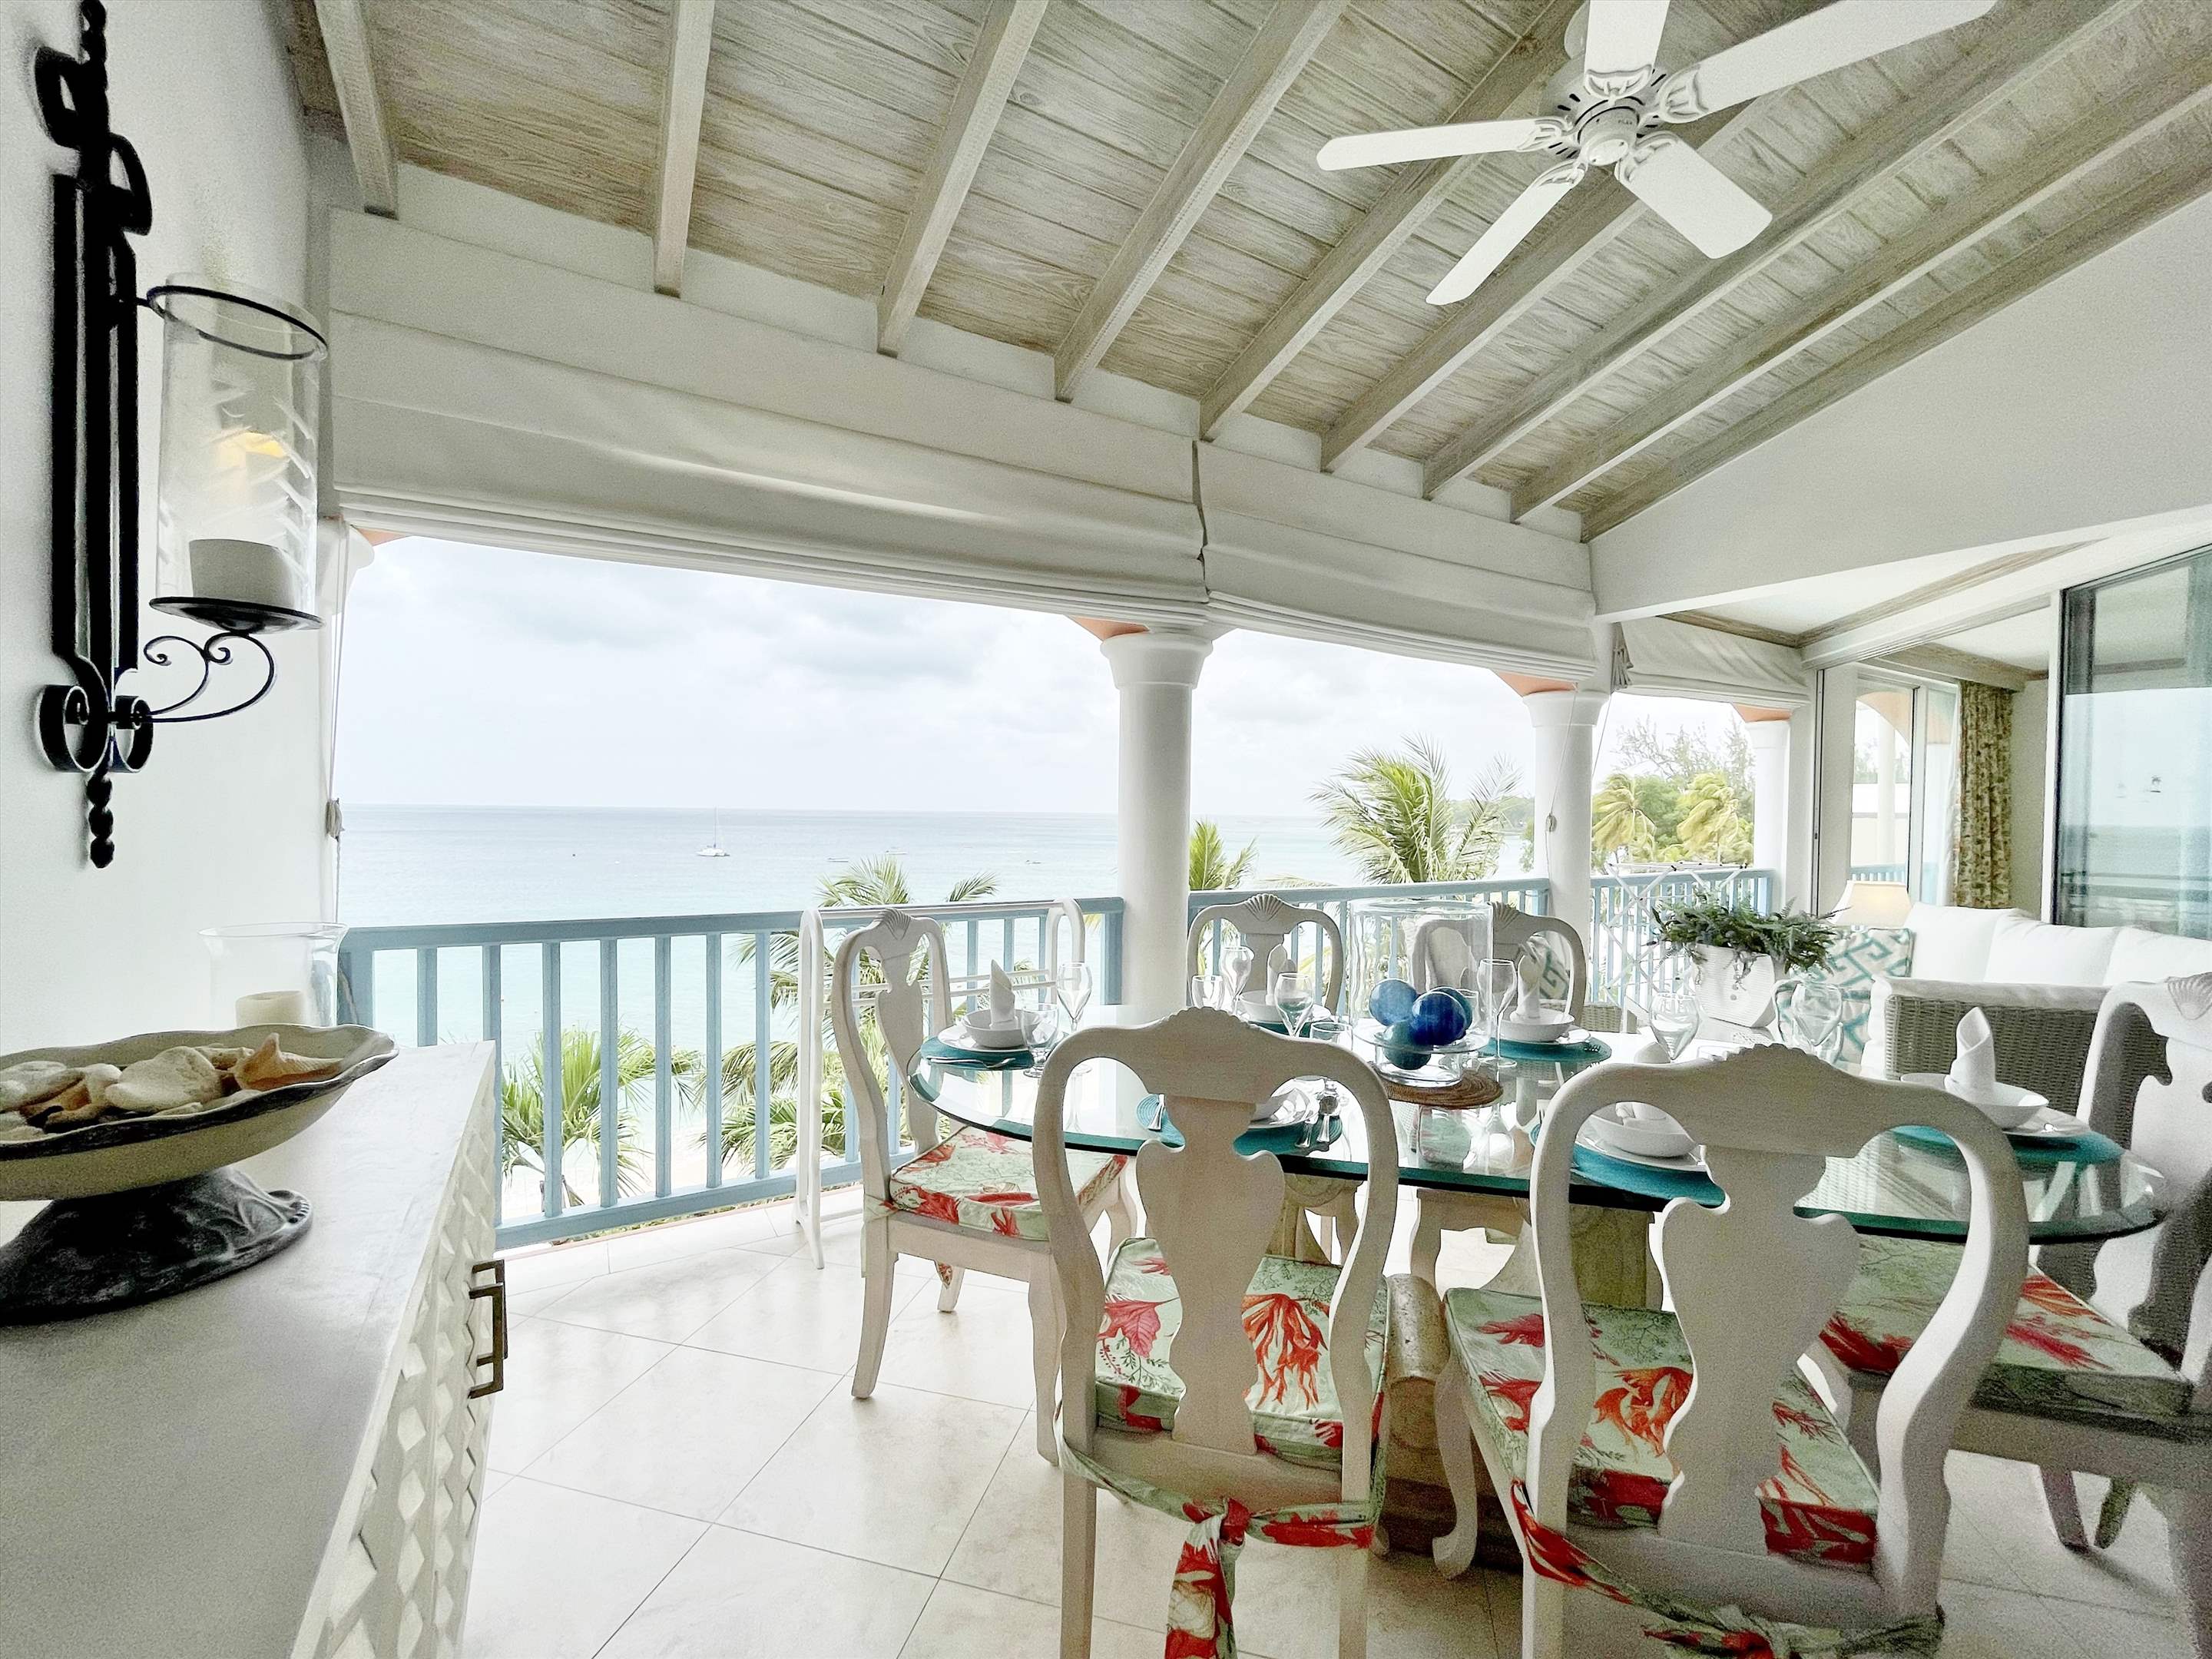 Villas on the Beach 403, 3 bedroom, 3 bedroom apartment in St. James & West Coast, Barbados Photo #8